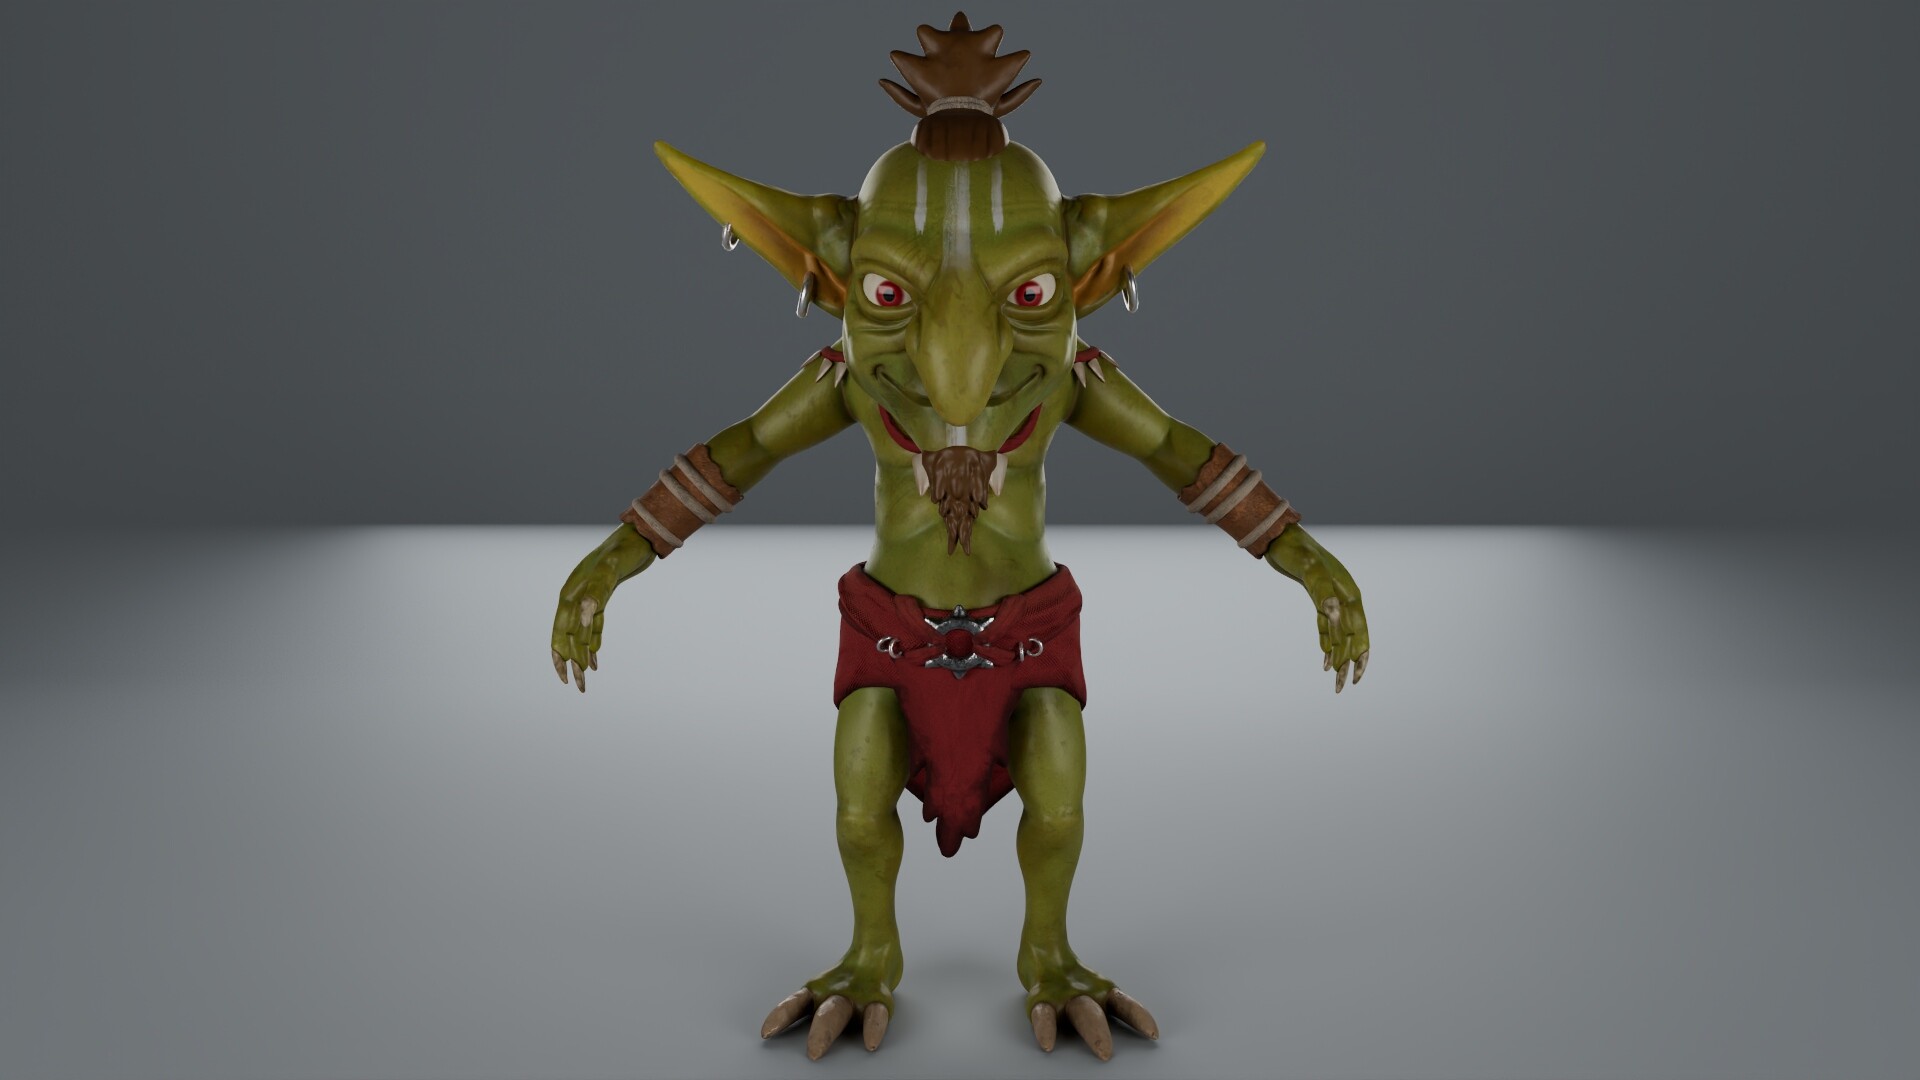 ArtStation - Goblin character